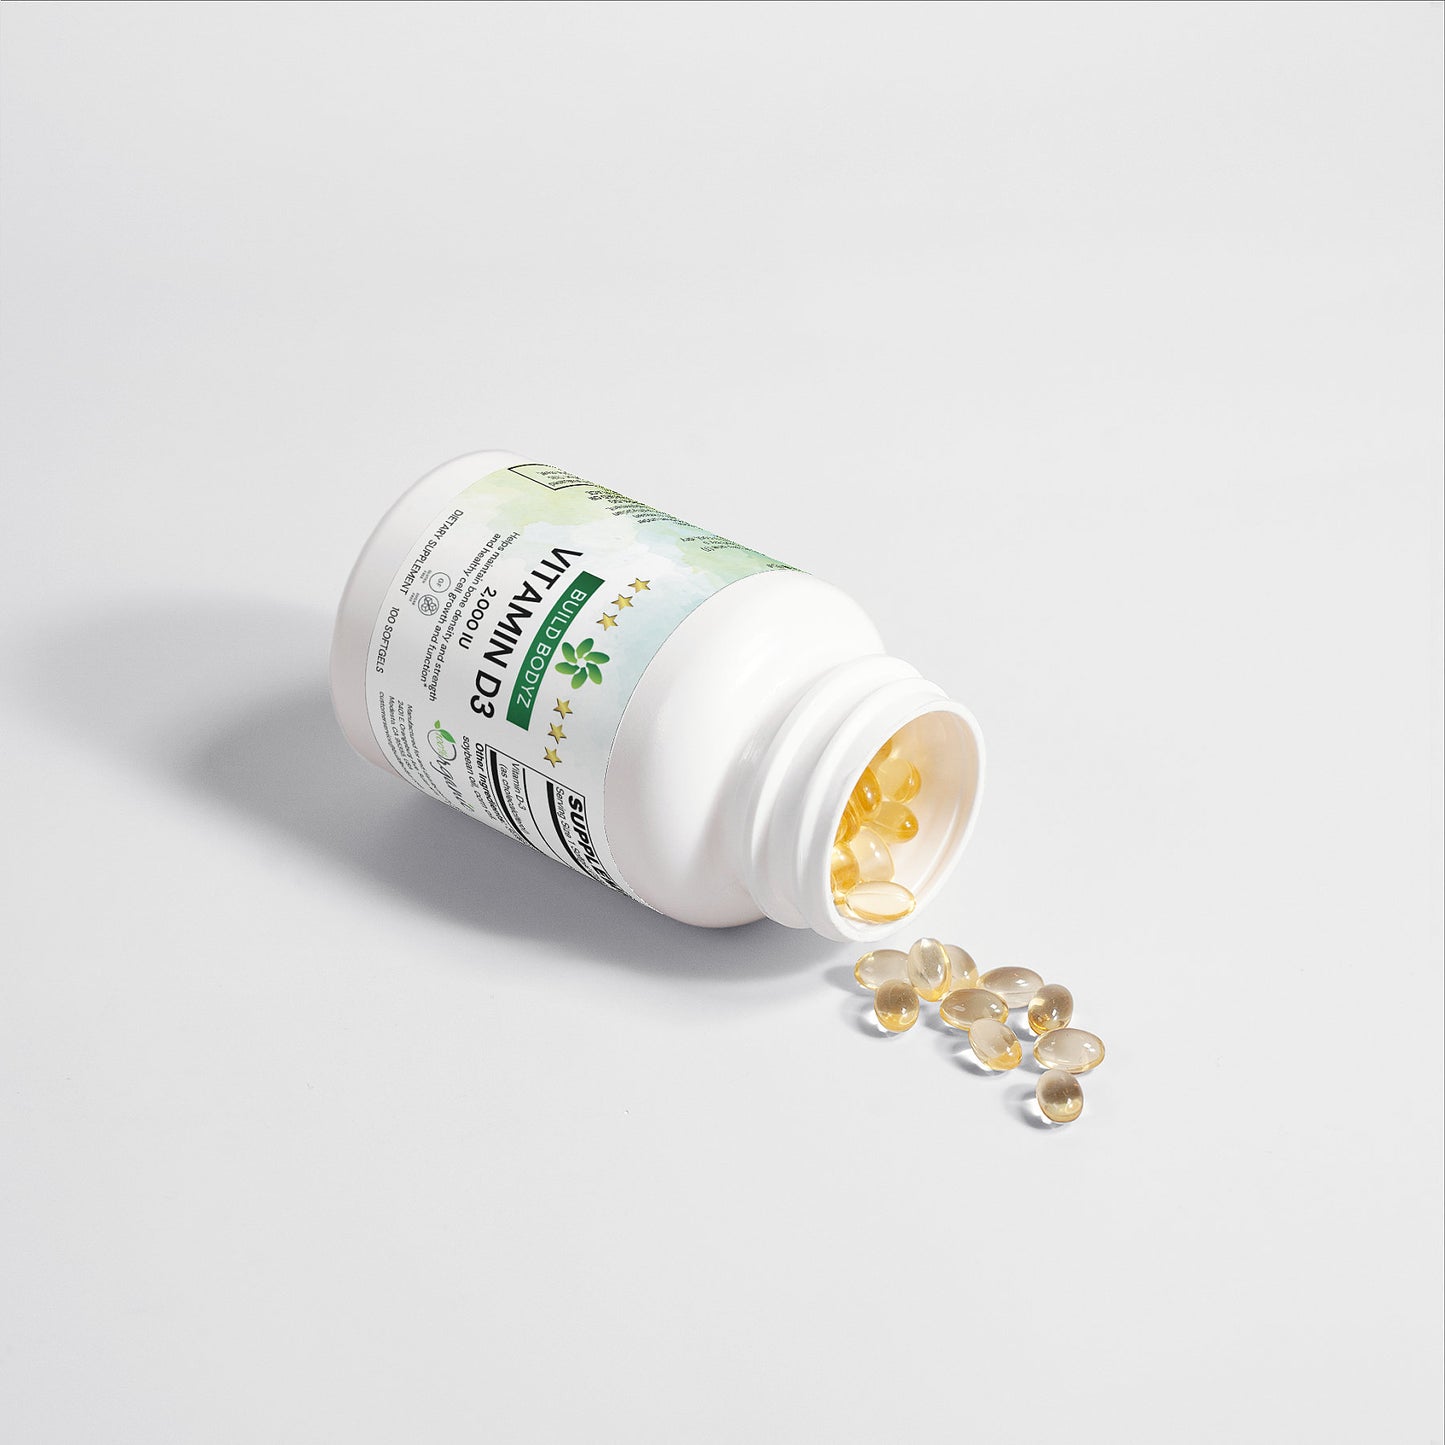 Vitamin D3 (2,000 IU) - Essential for Bone and Muscle Health - 100 Softgels, Gluten-Free